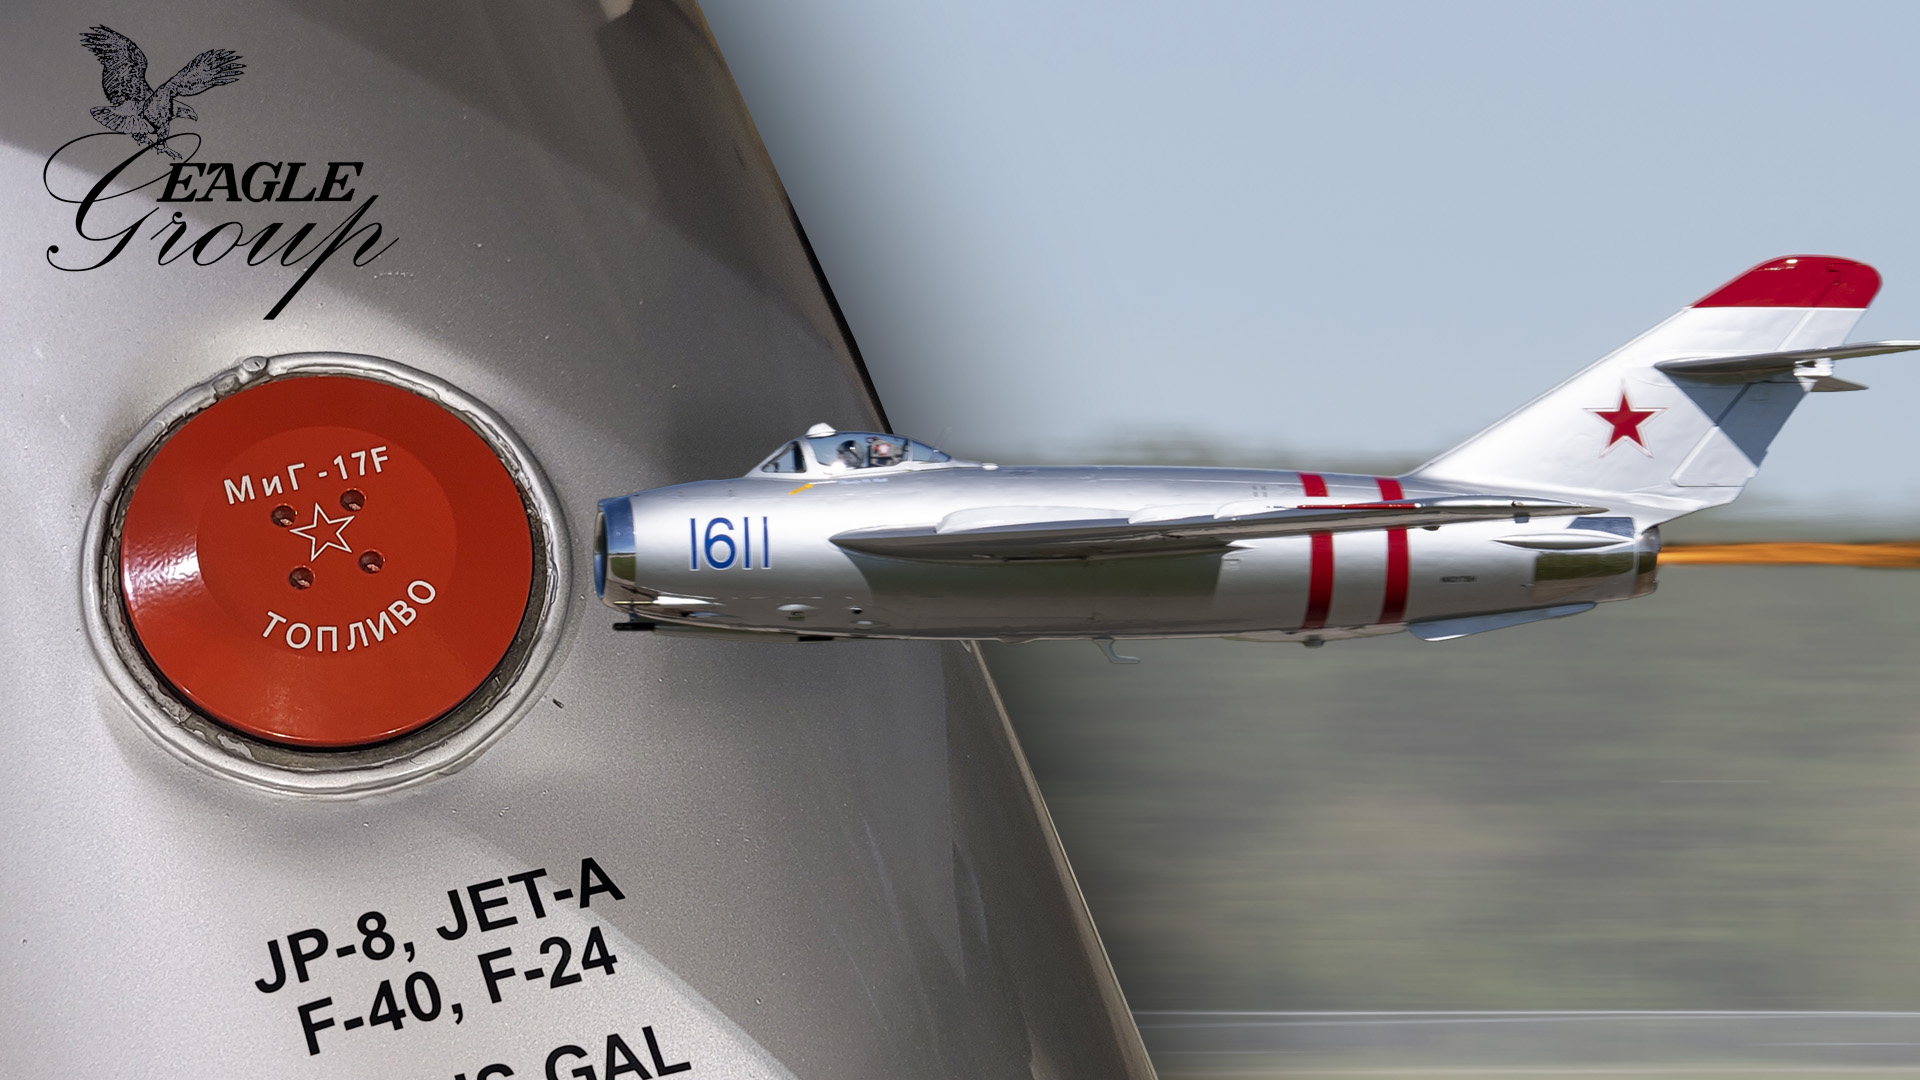 Replicated MiG 17F fuel cap and Mig 17F in flight